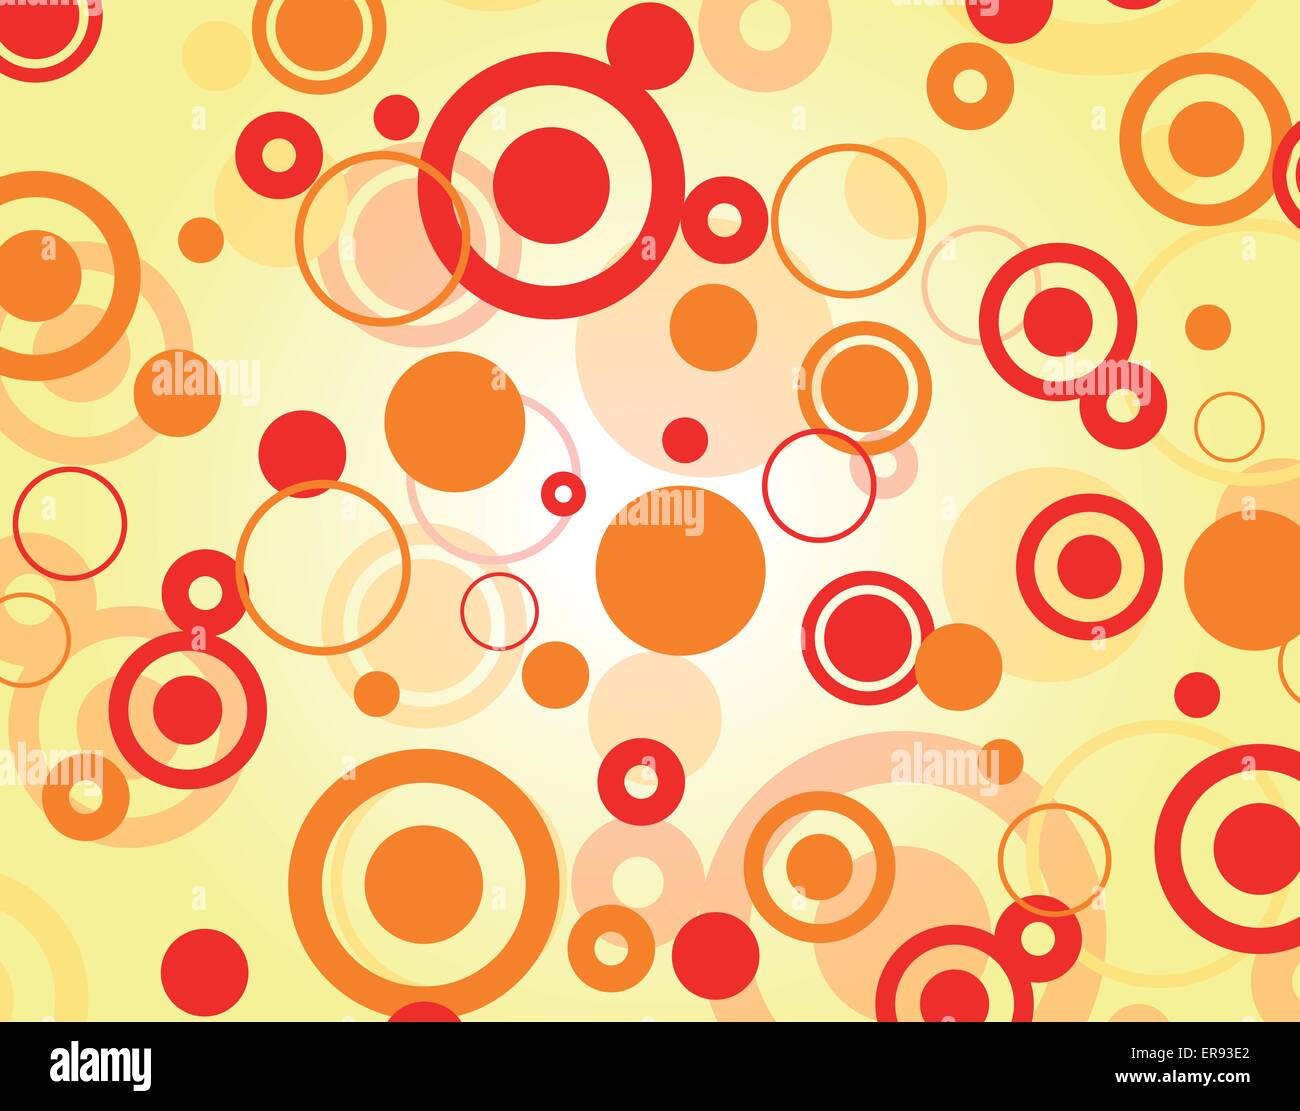 Vektor-Illustration Mode Hintergrund mit warmen Farben Stock Vektor